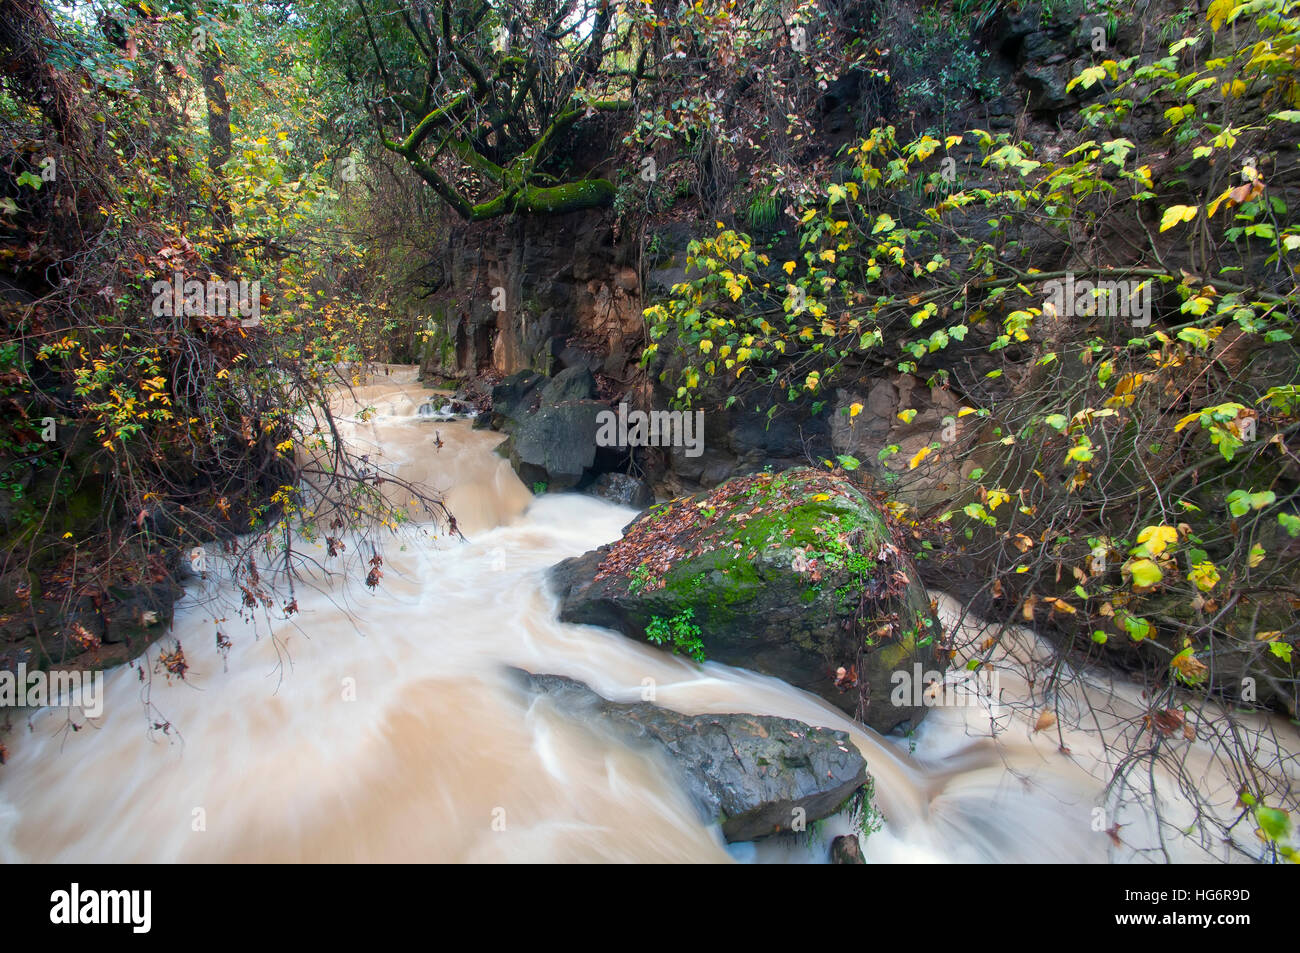 Banias stream, Israel Stock Photo